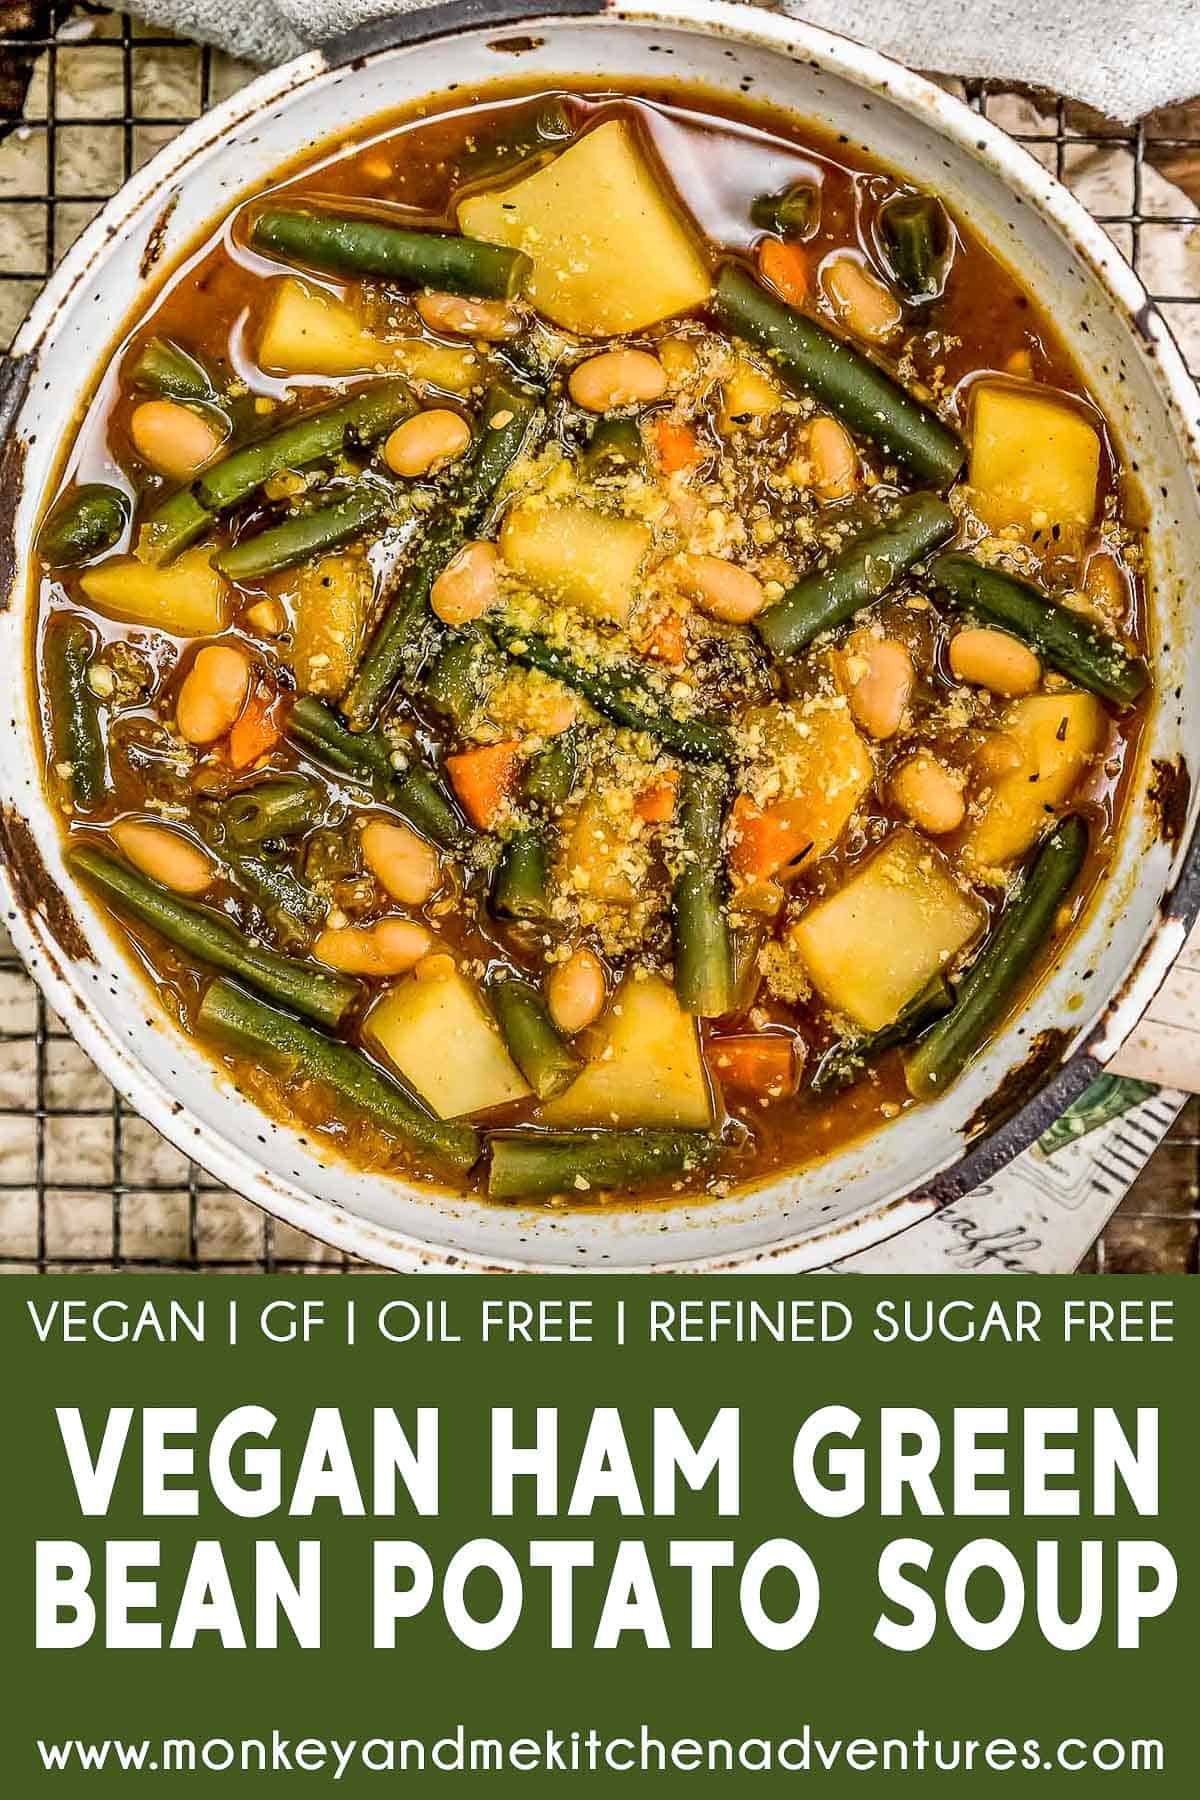 Vegan “Ham” Green Bean Potato Soup with text description